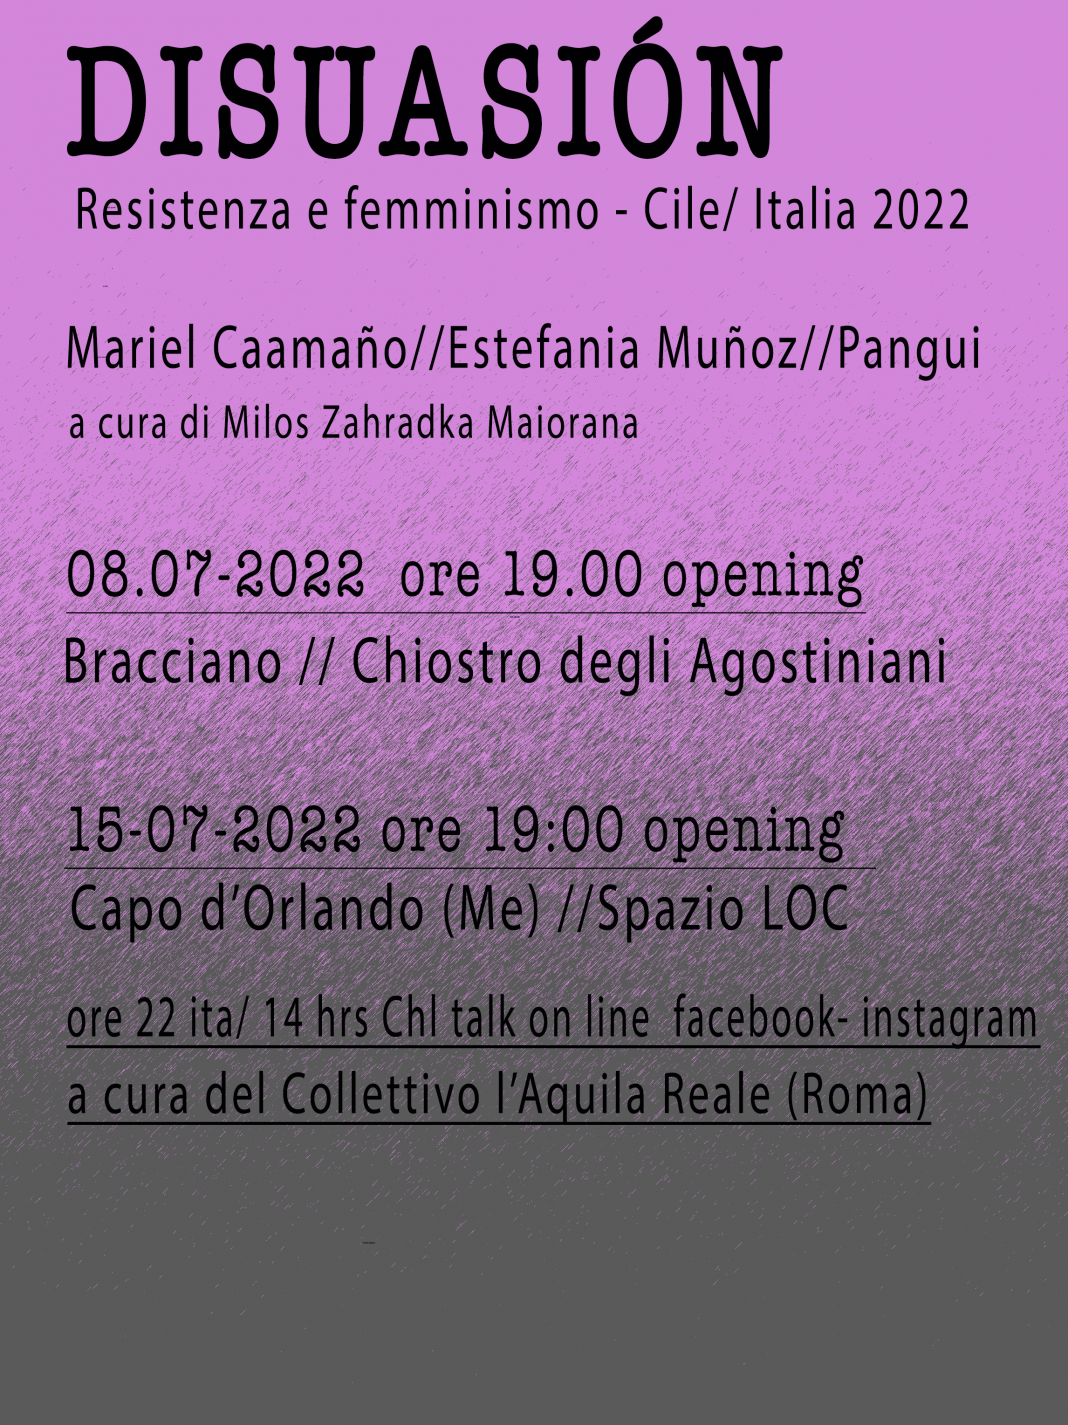 DISUASIÓN – Resistenza e femminismo – Cile Italia 2022https://www.exibart.com/repository/media/formidable/11/img/70a/bozza1disuasion-1068x1425.png